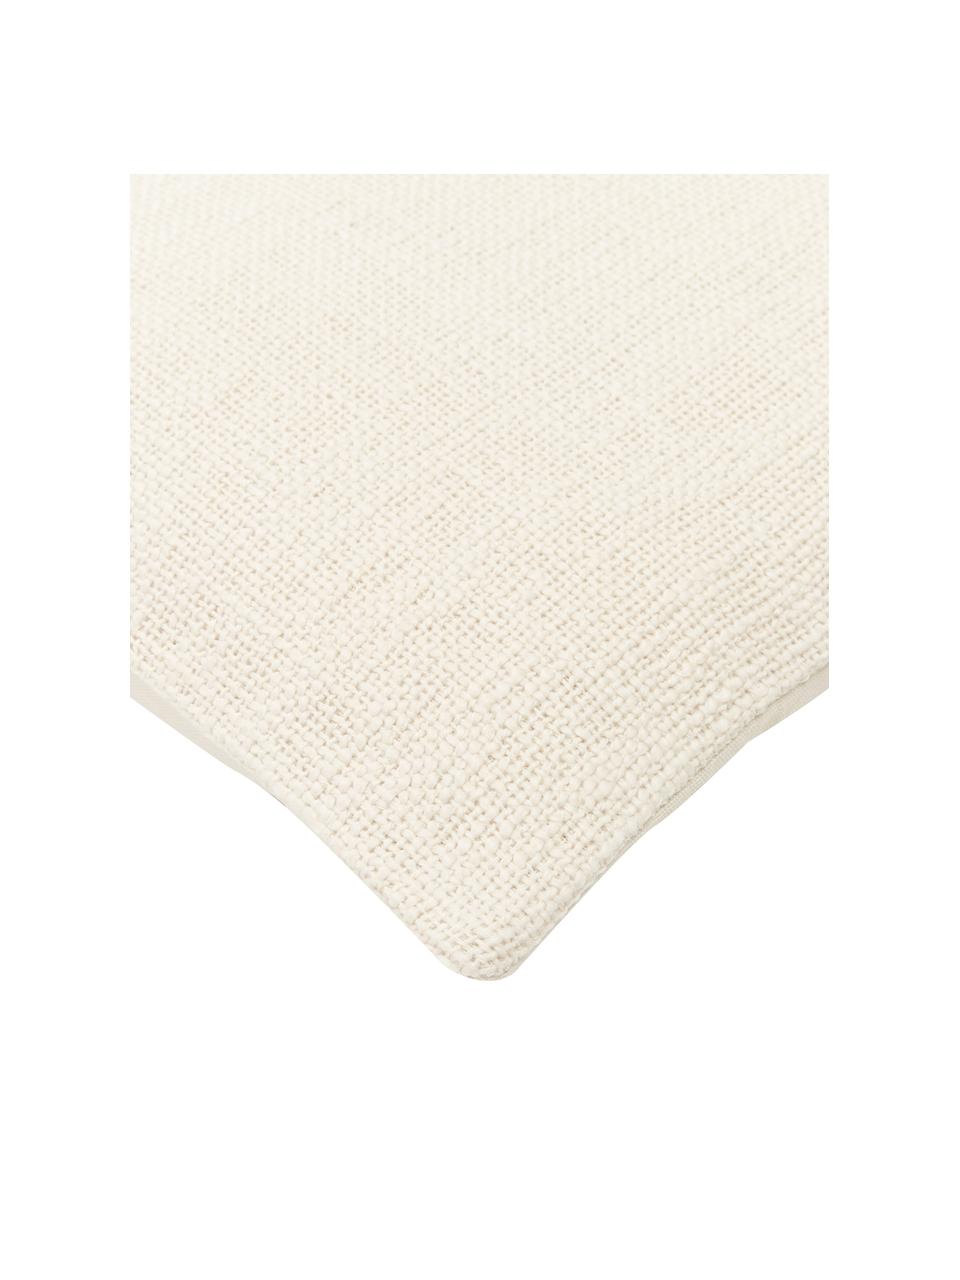 Federa arredo color naturale Anise, 100% cotone, Bianco crema, Larg. 45 x Lung. 45 cm